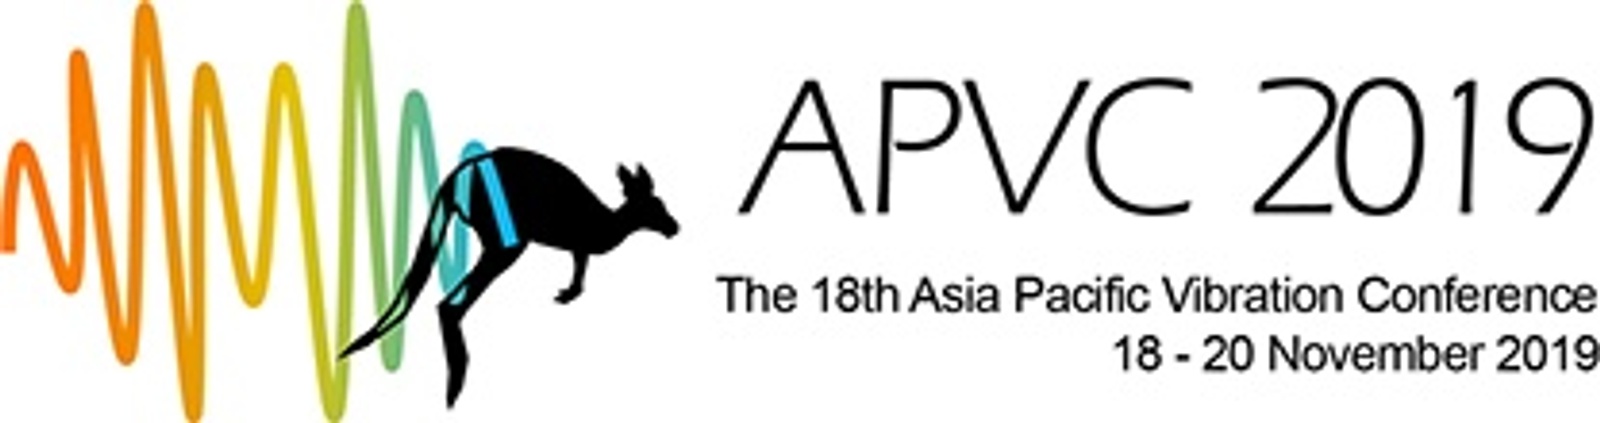 Banner image for APVC2019